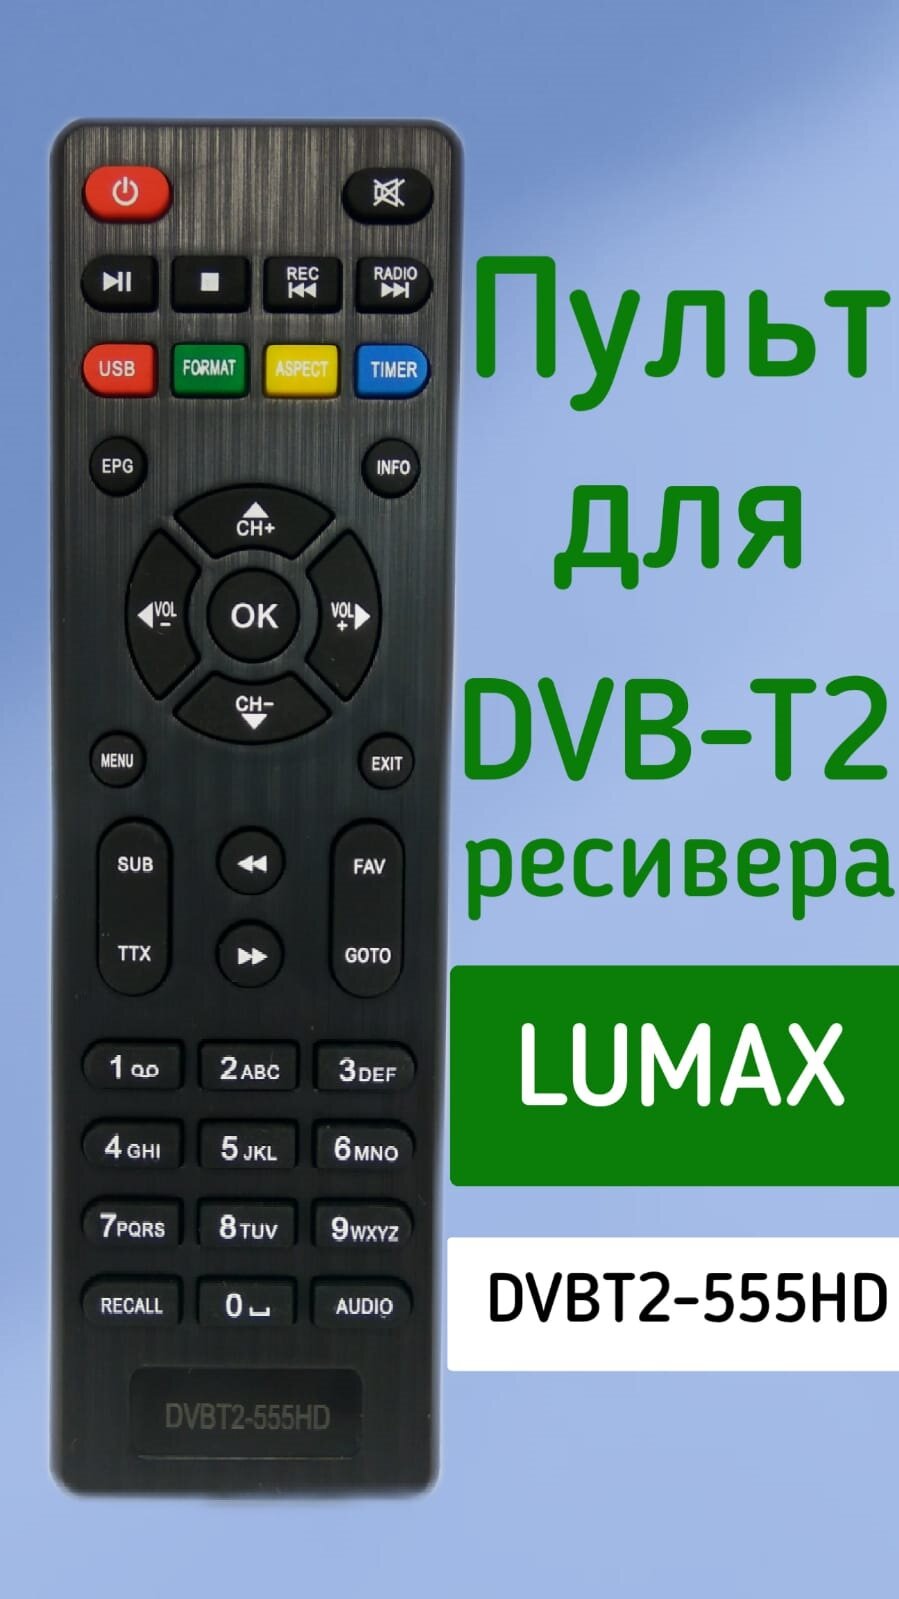 Пульт для приставки Lumax DVBT2 ресивер DVBT2-555HD